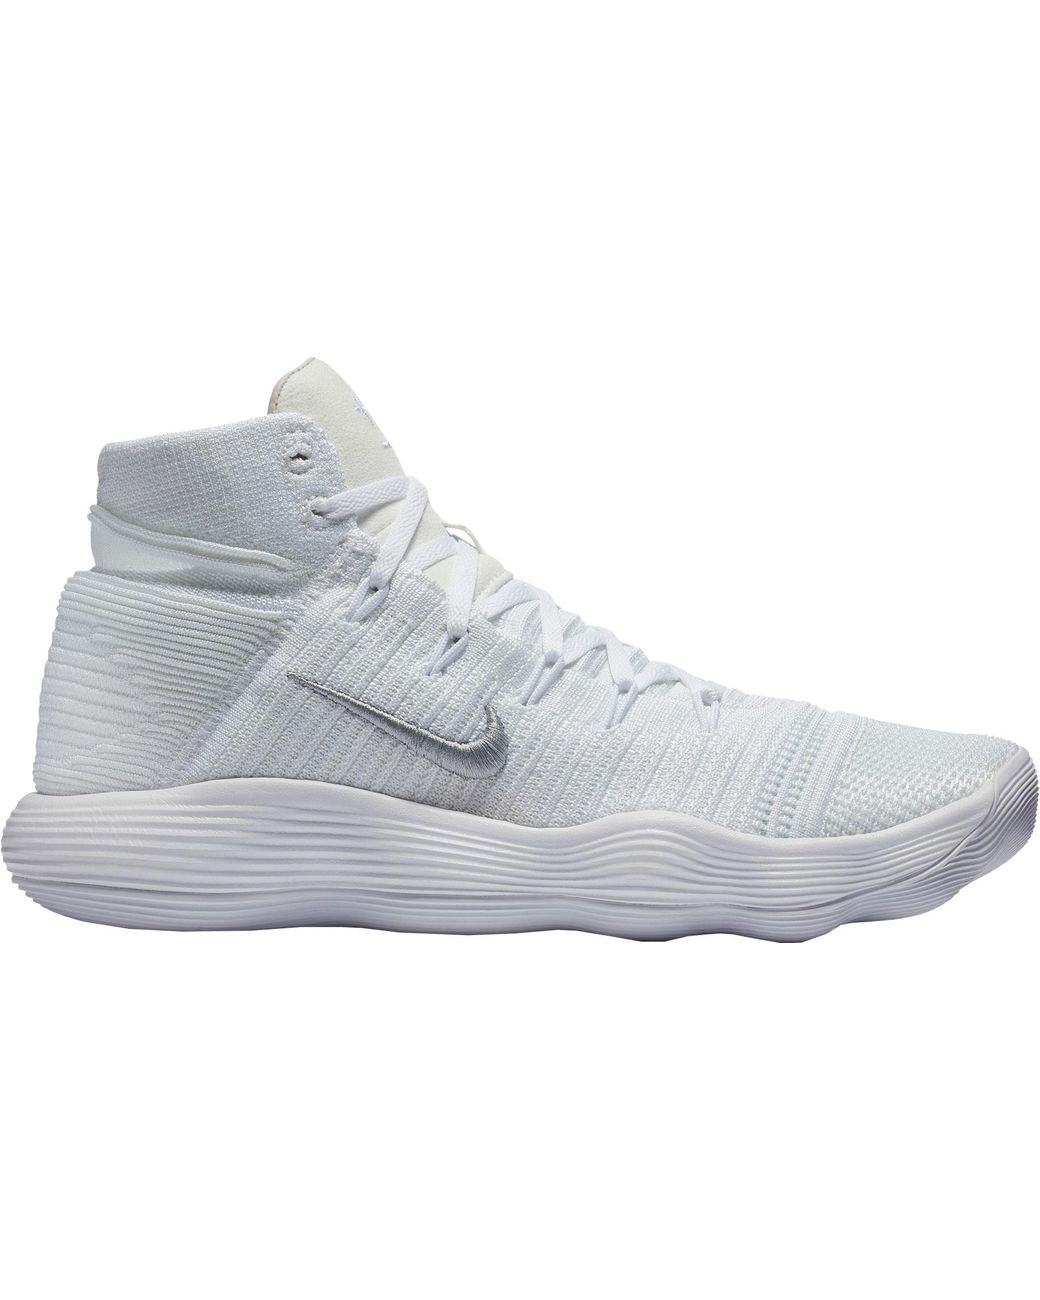 Nike React Hyperdunk 2017 Flyknit Basketball Shoes in White/Silver ...